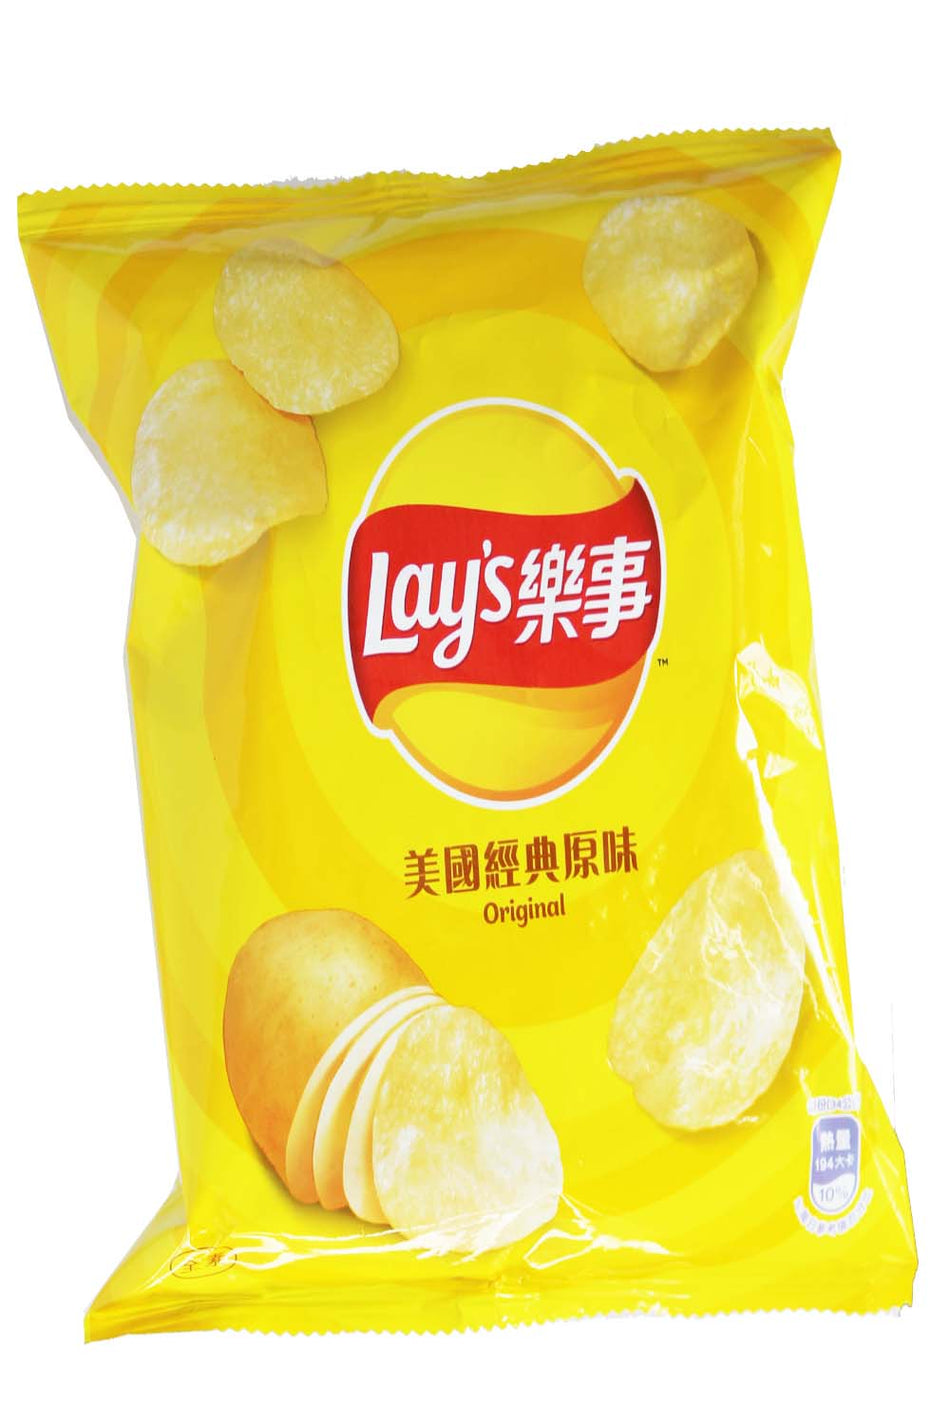 Lay's Potato  Original flavor chip